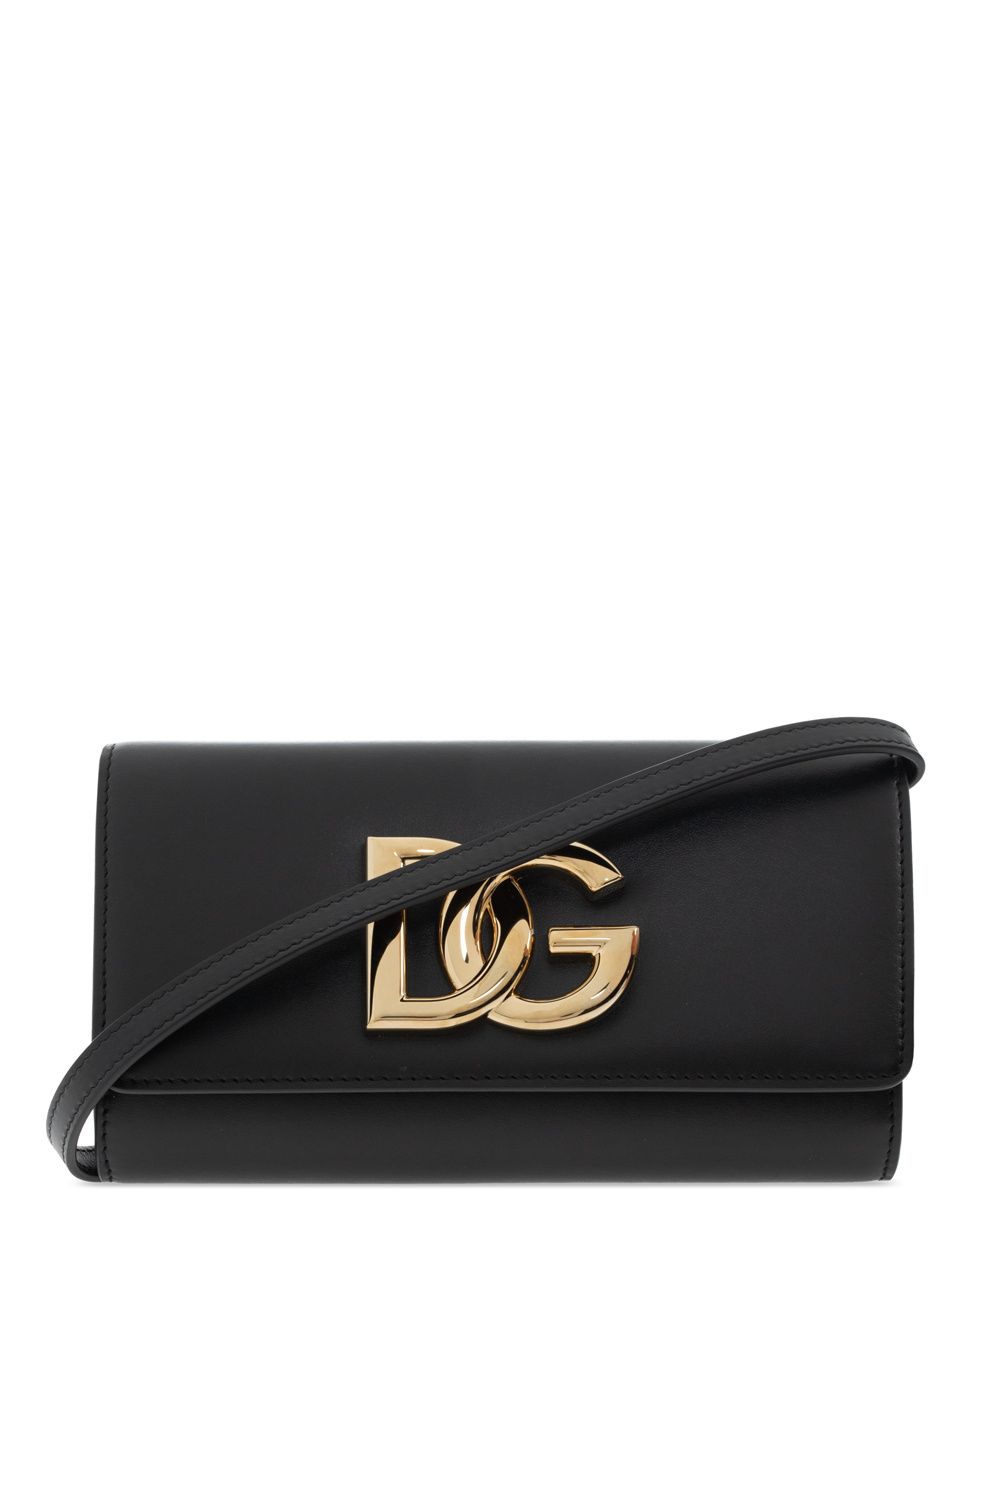 Dolce & Gabbana '3.5 Clutch' shoulder bag | Women's Bags | Vitkac